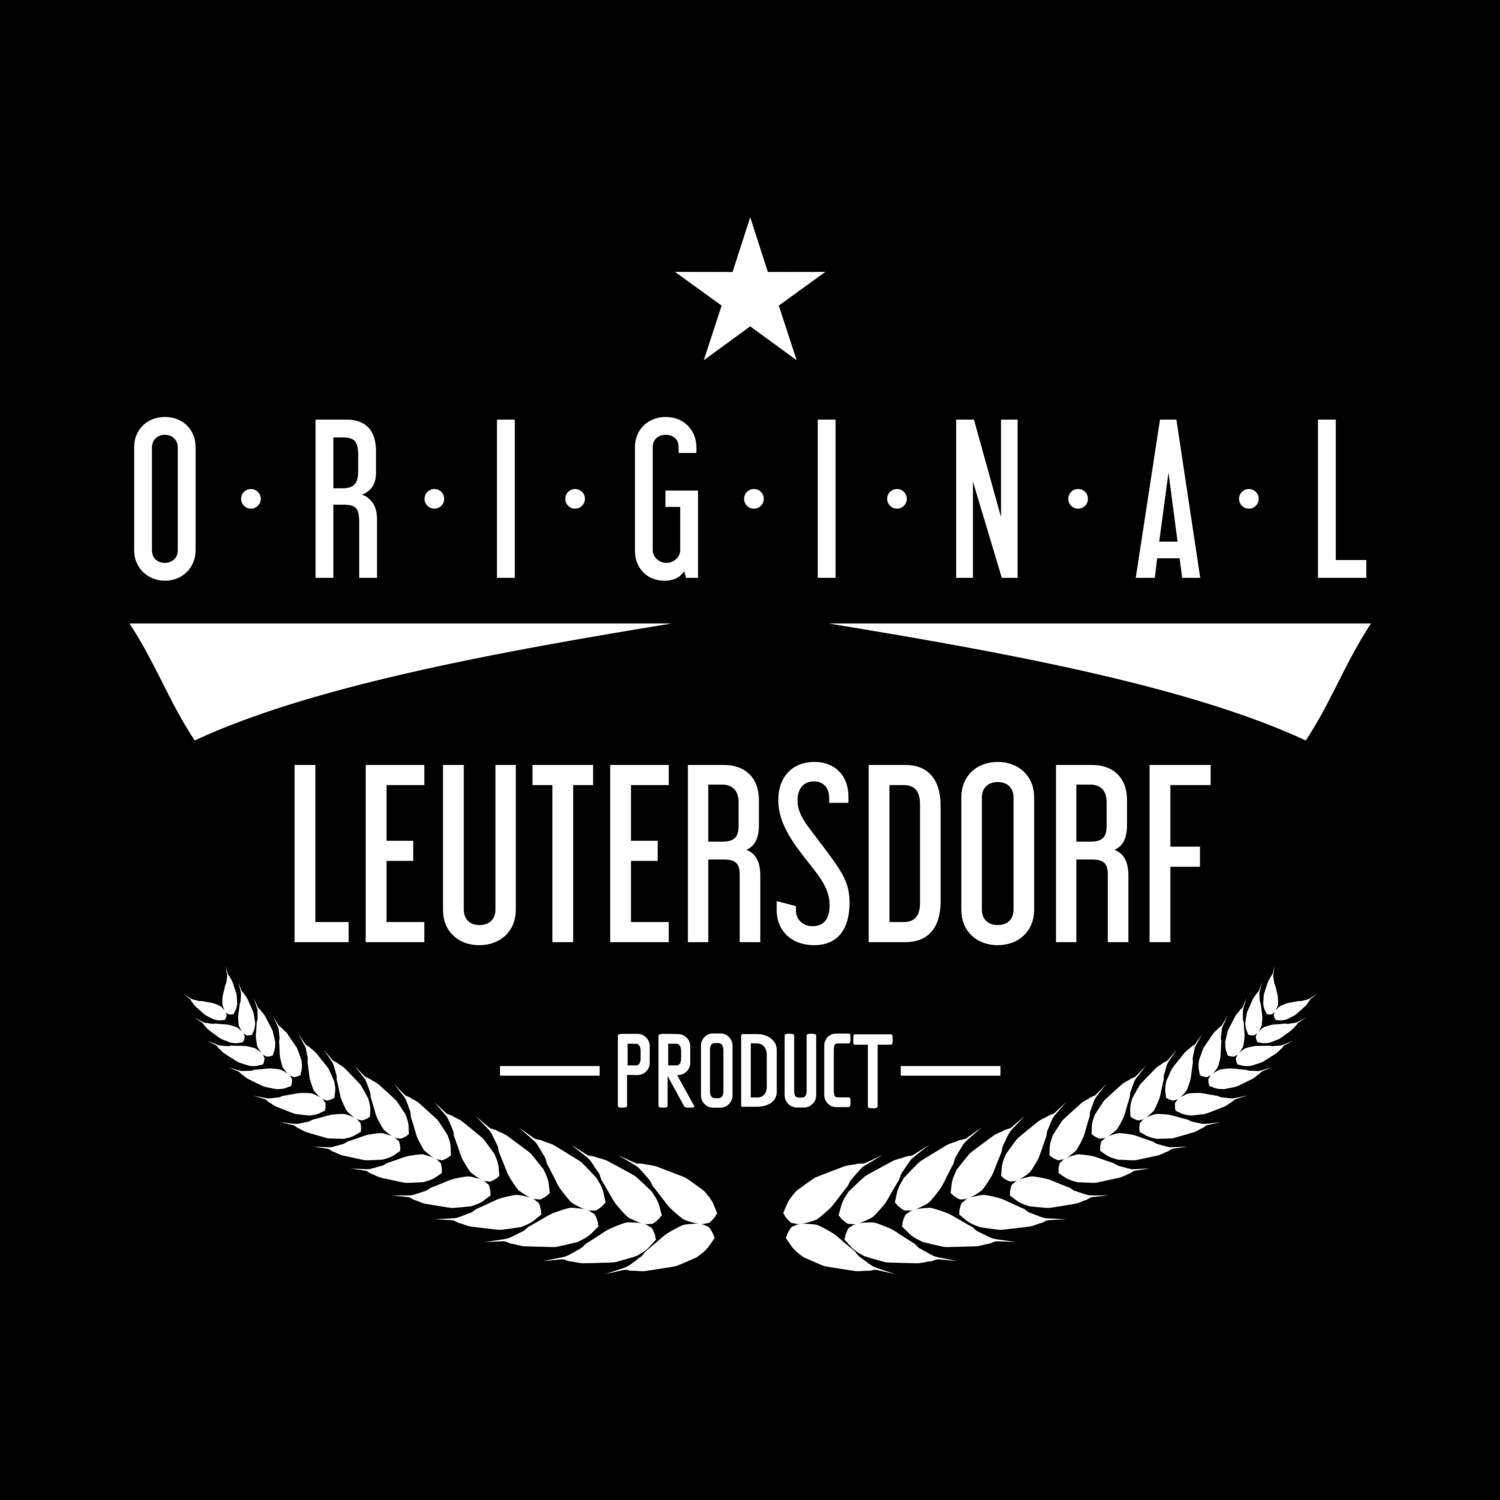 Leutersdorf T-Shirt »Original Product«